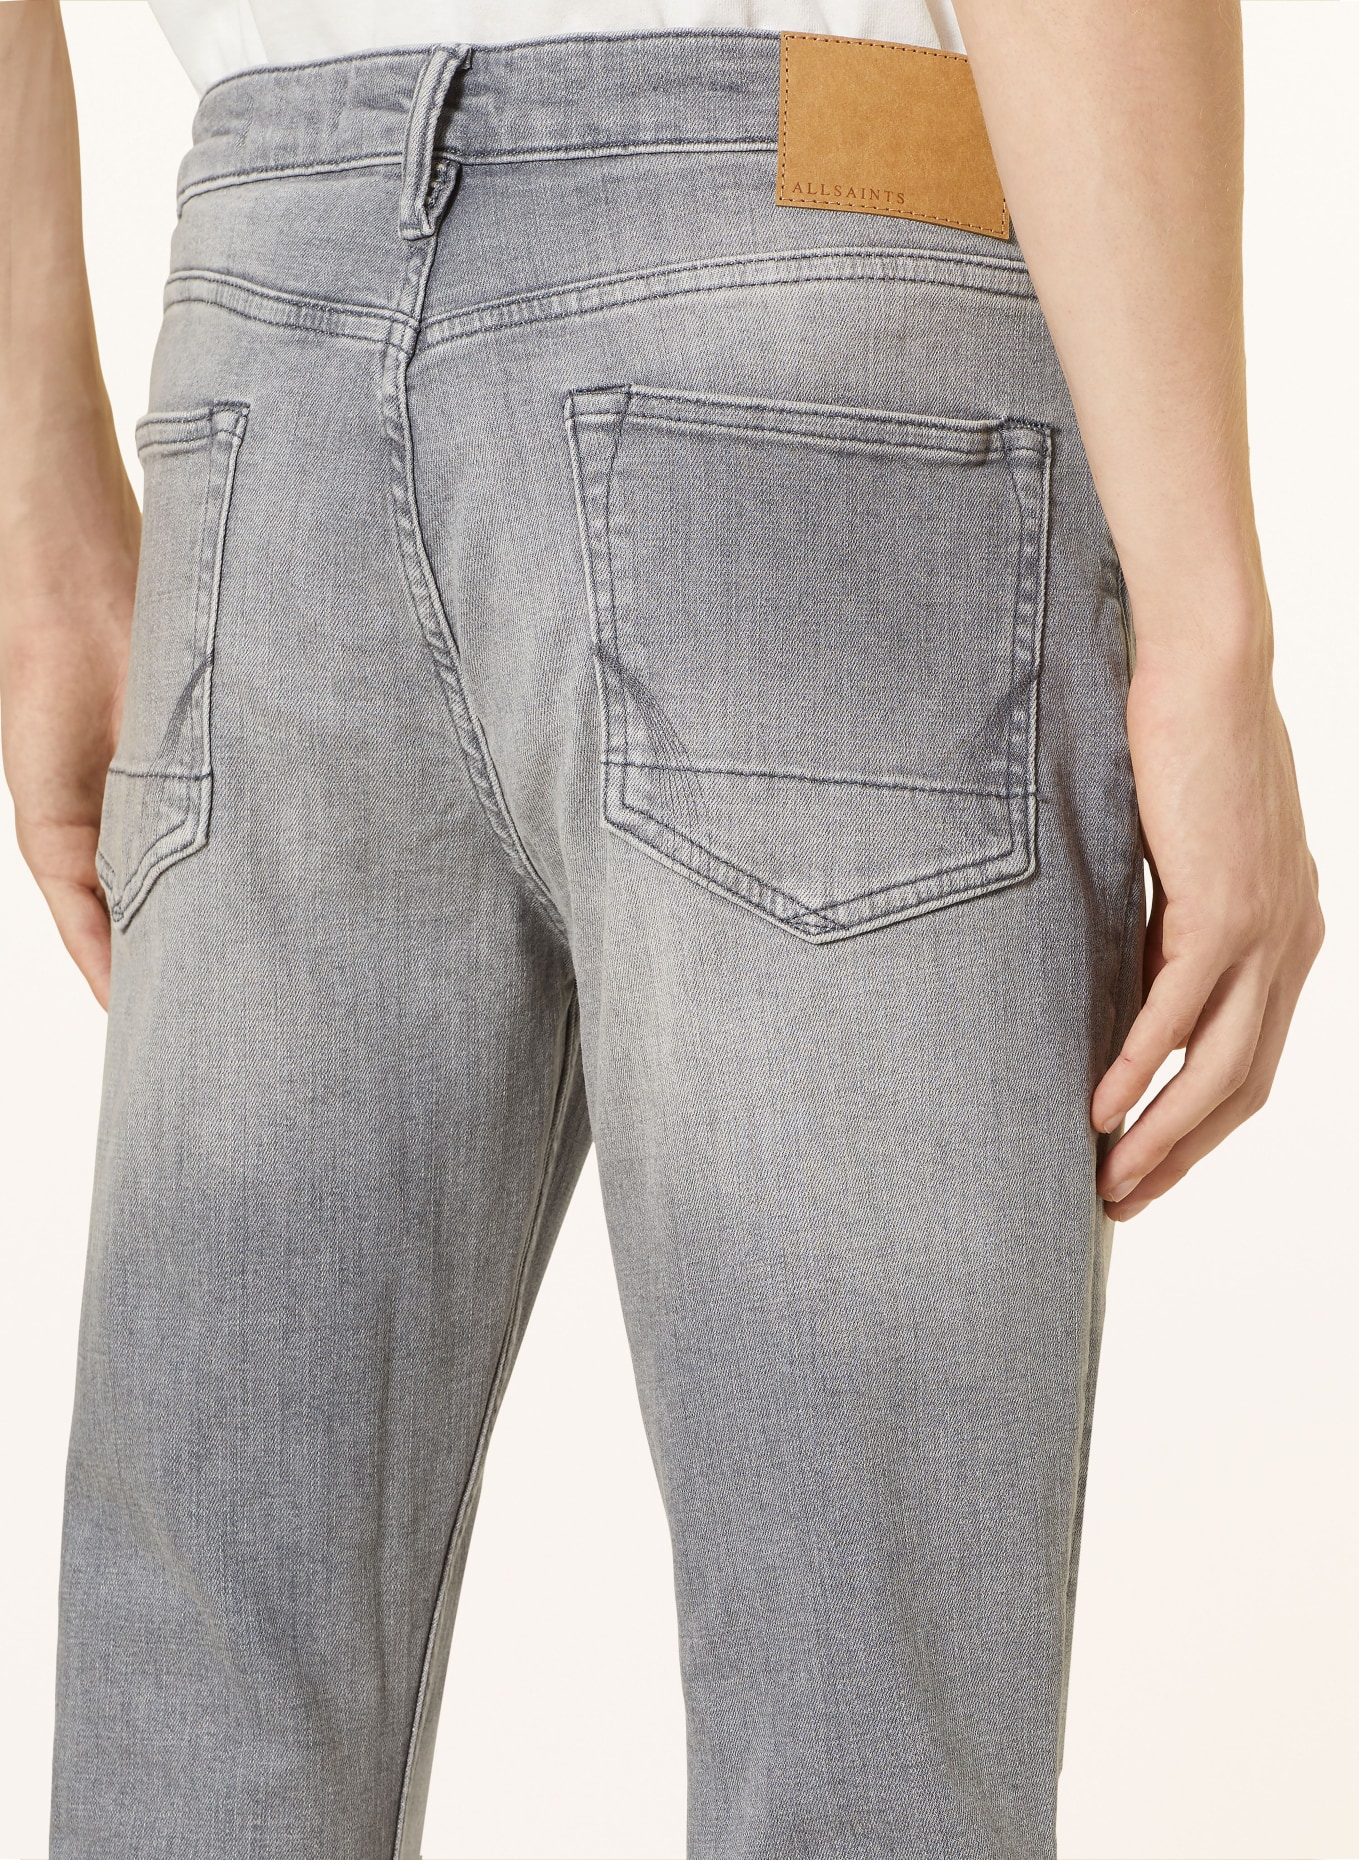 ALLSAINTS Jeans CIGARETTE Skinny Fit, Farbe: 7 GREY (Bild 6)